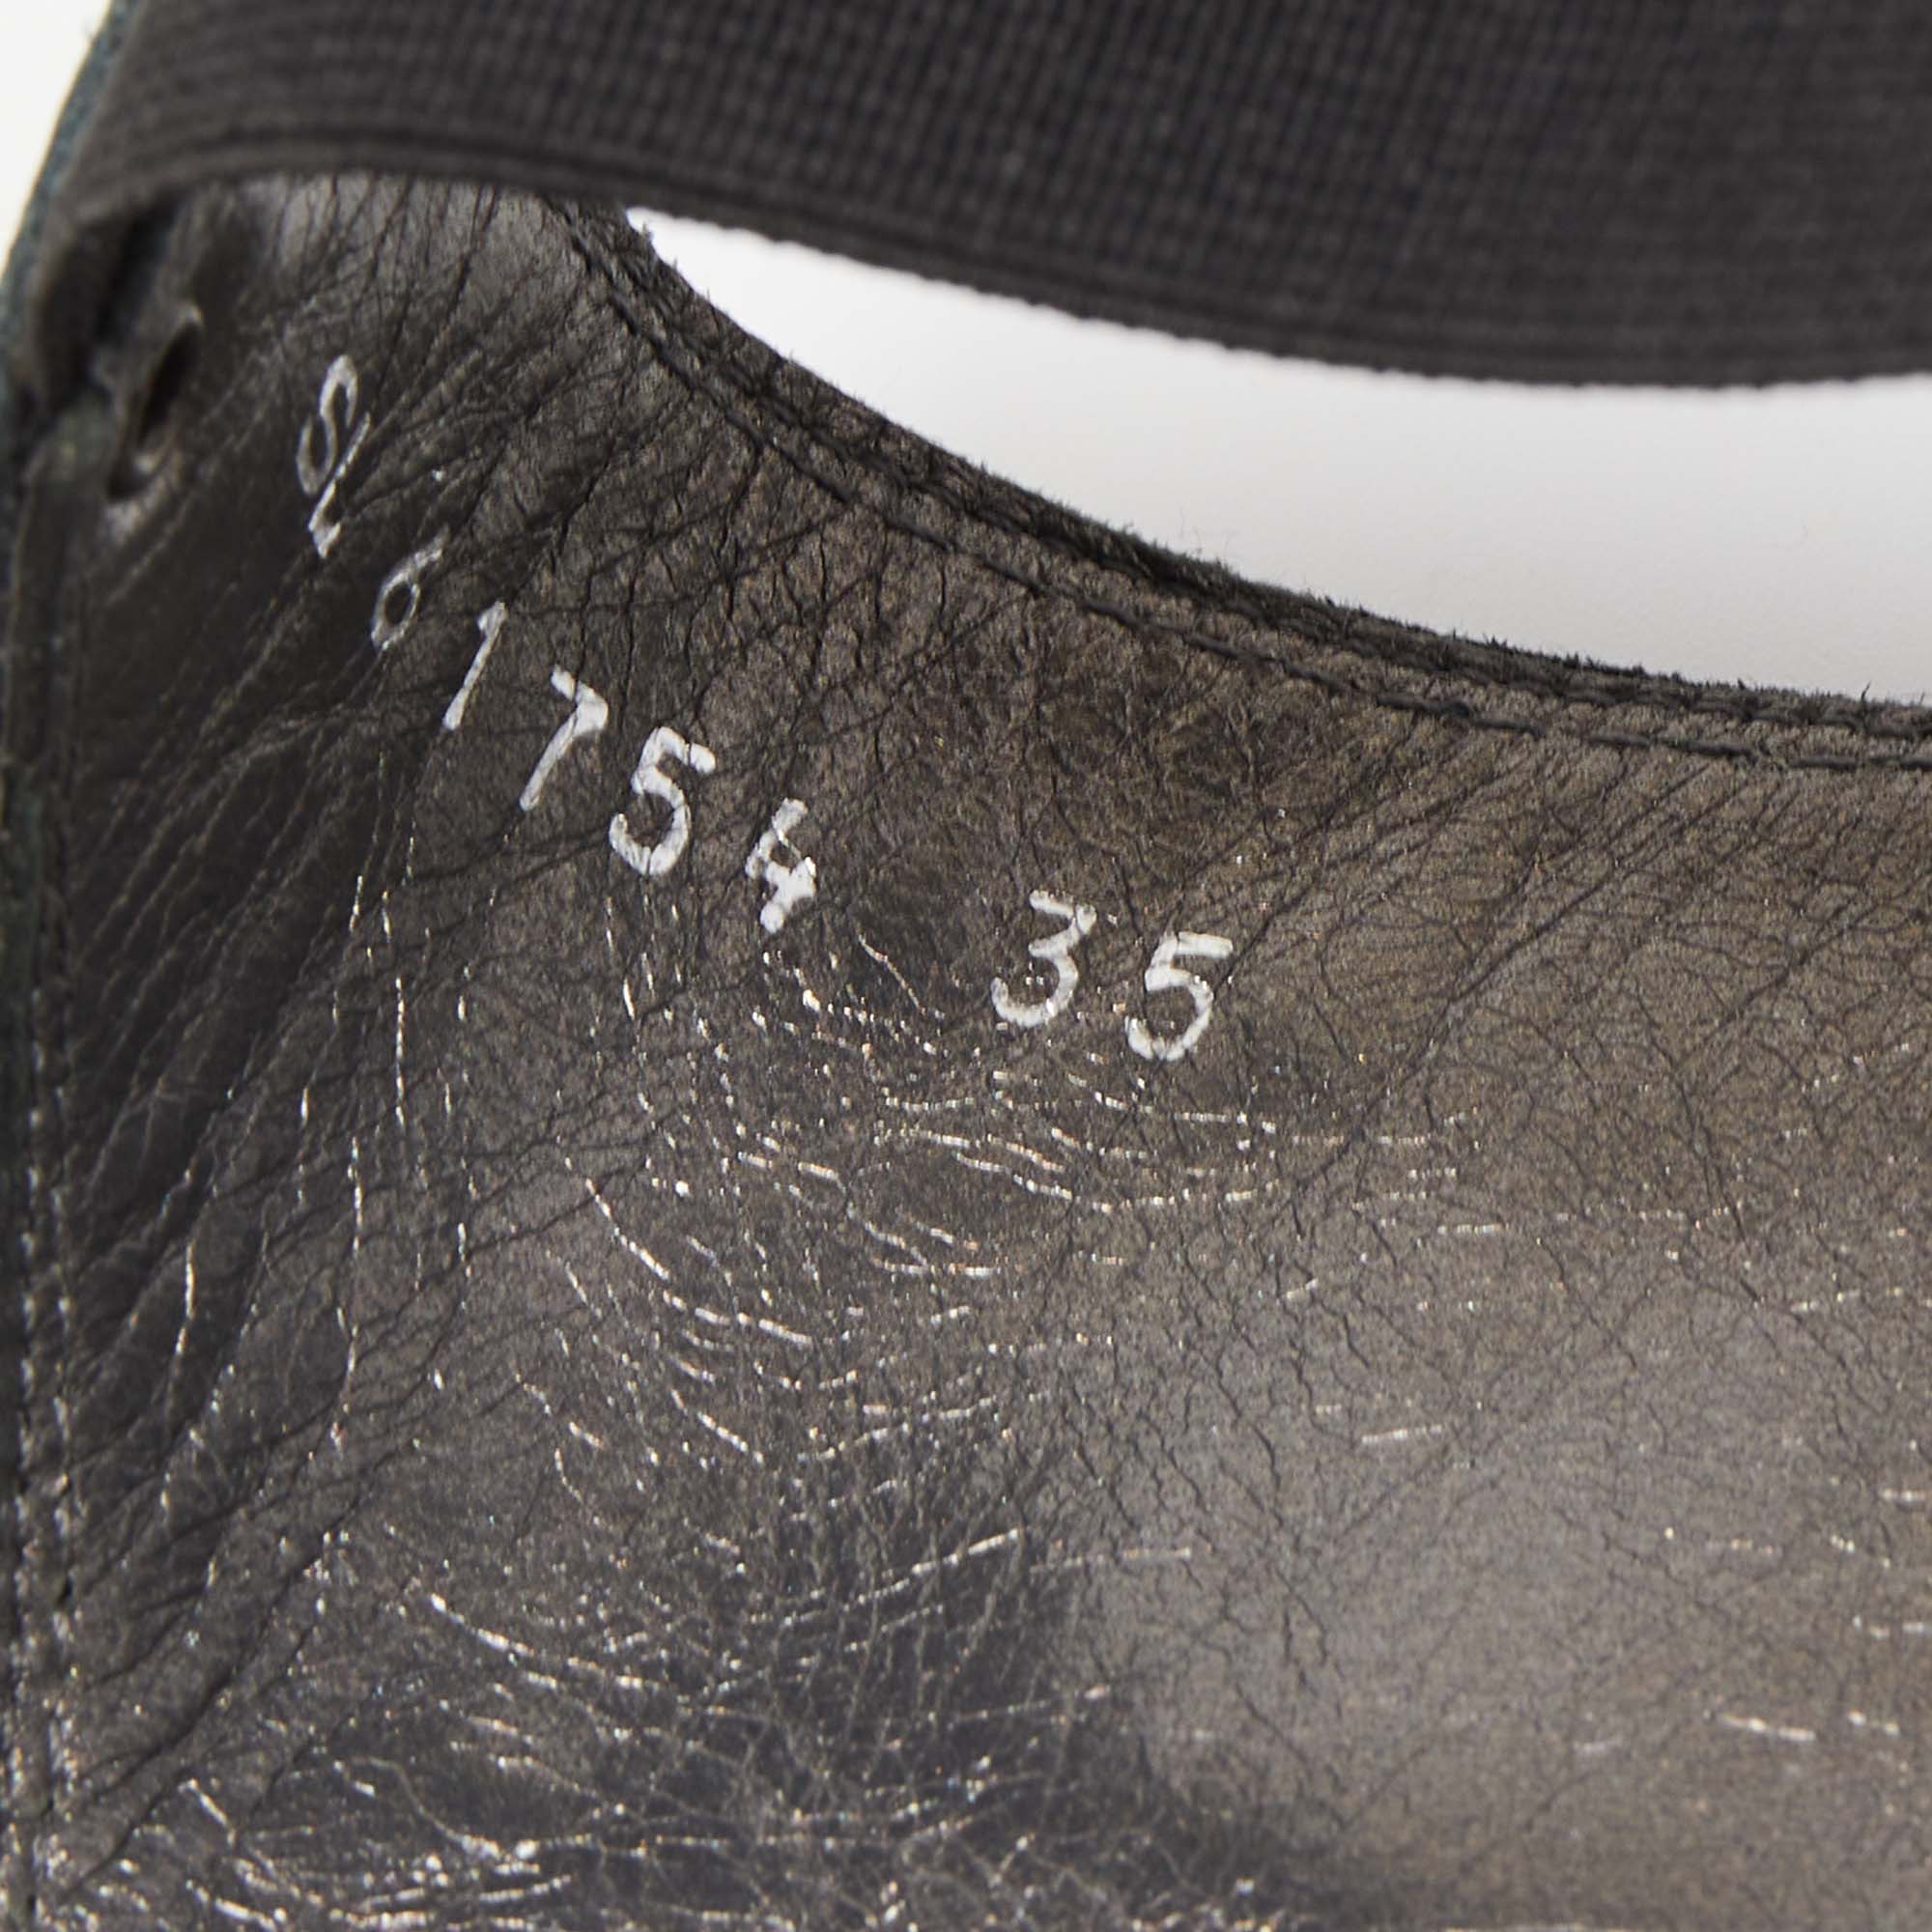 Stuart Weitzman Black Leather Gladiator Backview Sandals Size 35